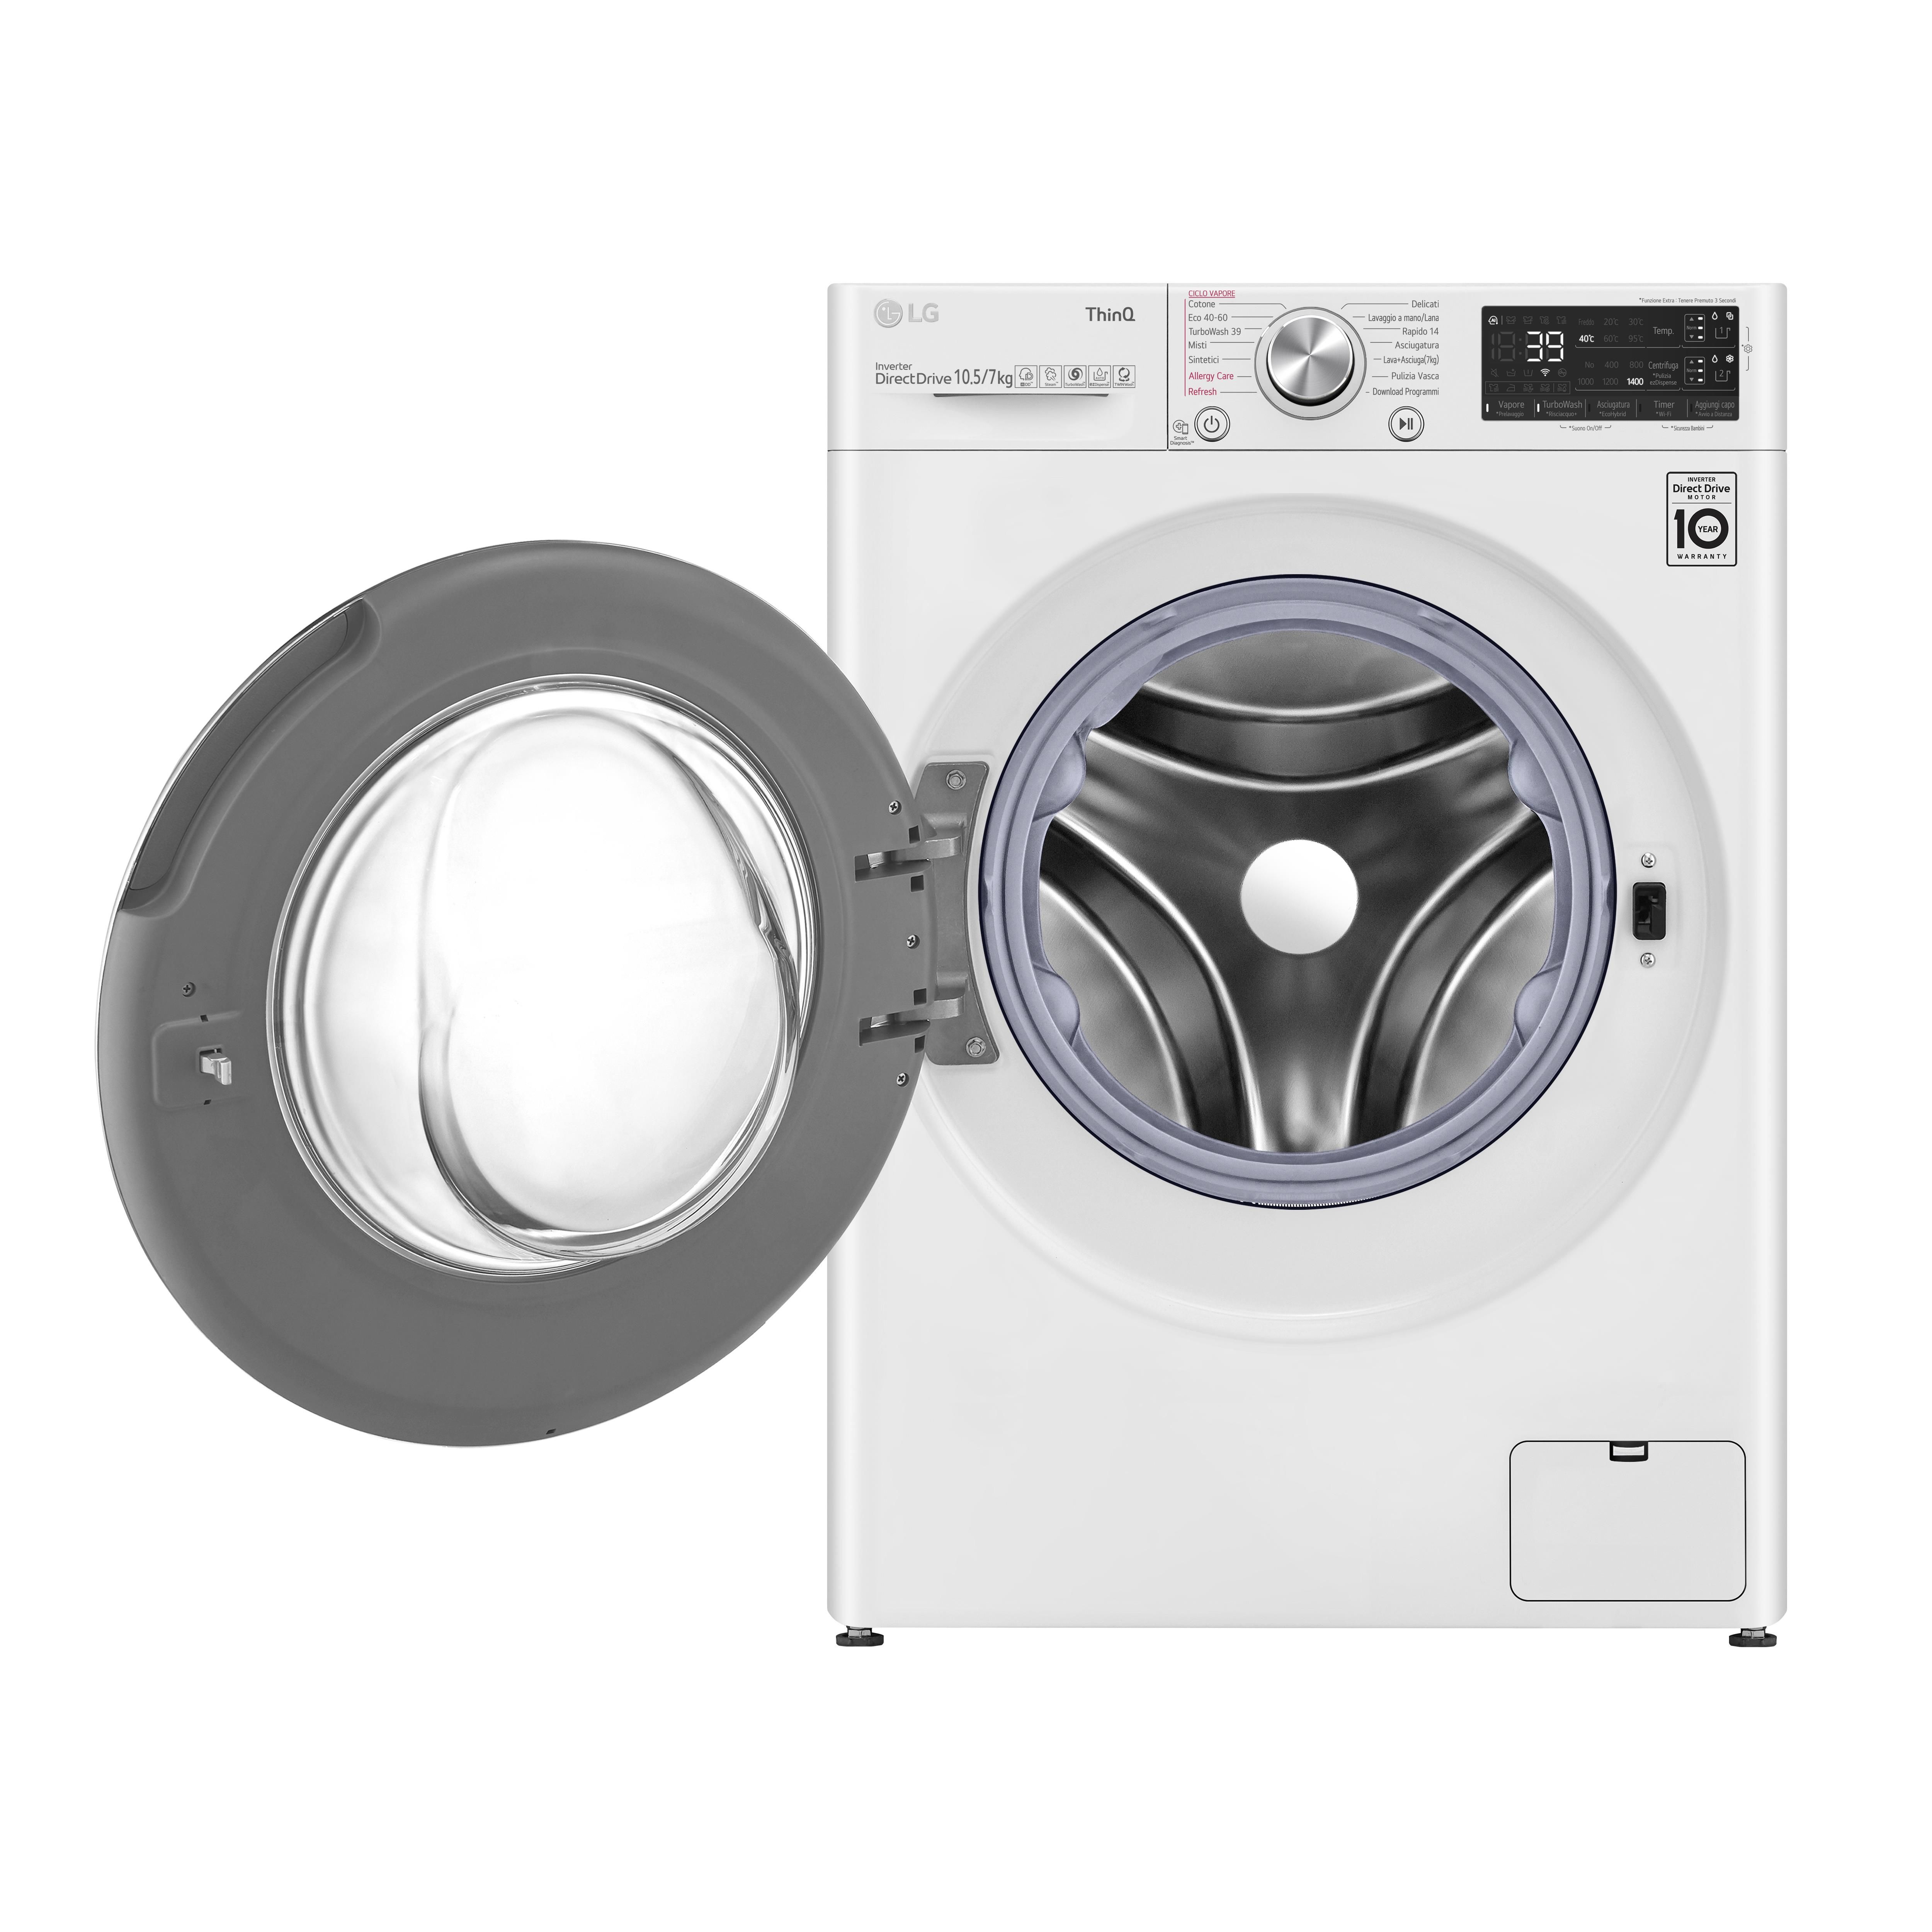 Detersivo polvere lavatrice professionale | Eko Professional KG 900 GR